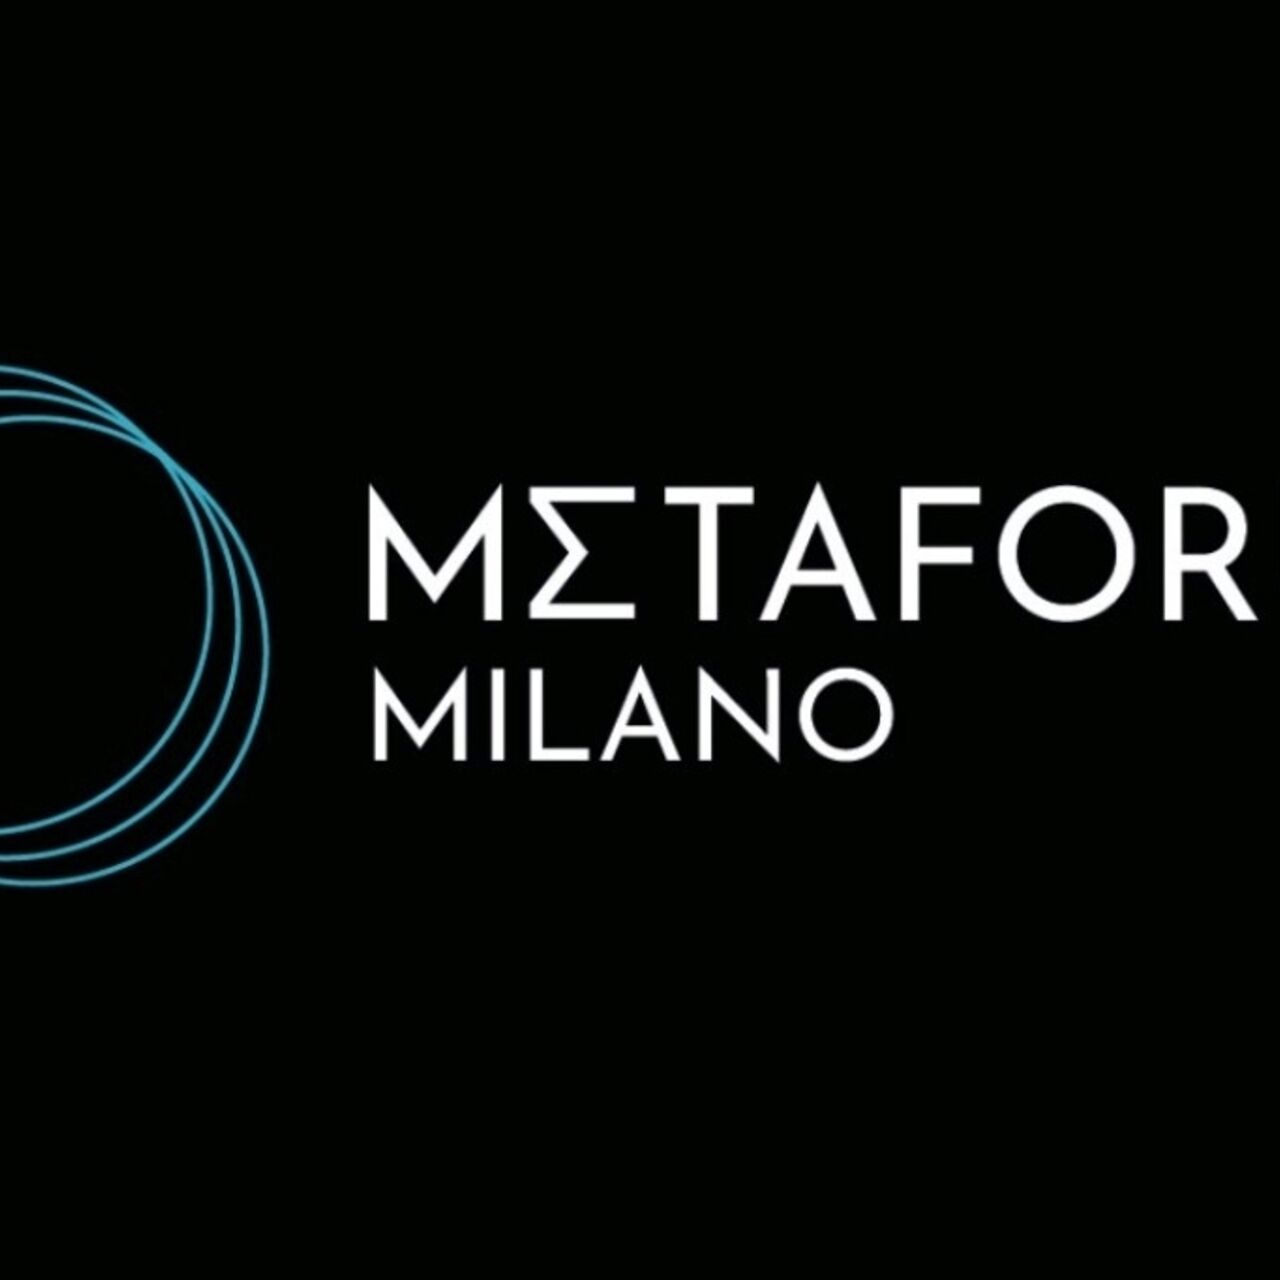 Метафорум: логото на Метафорум Милано